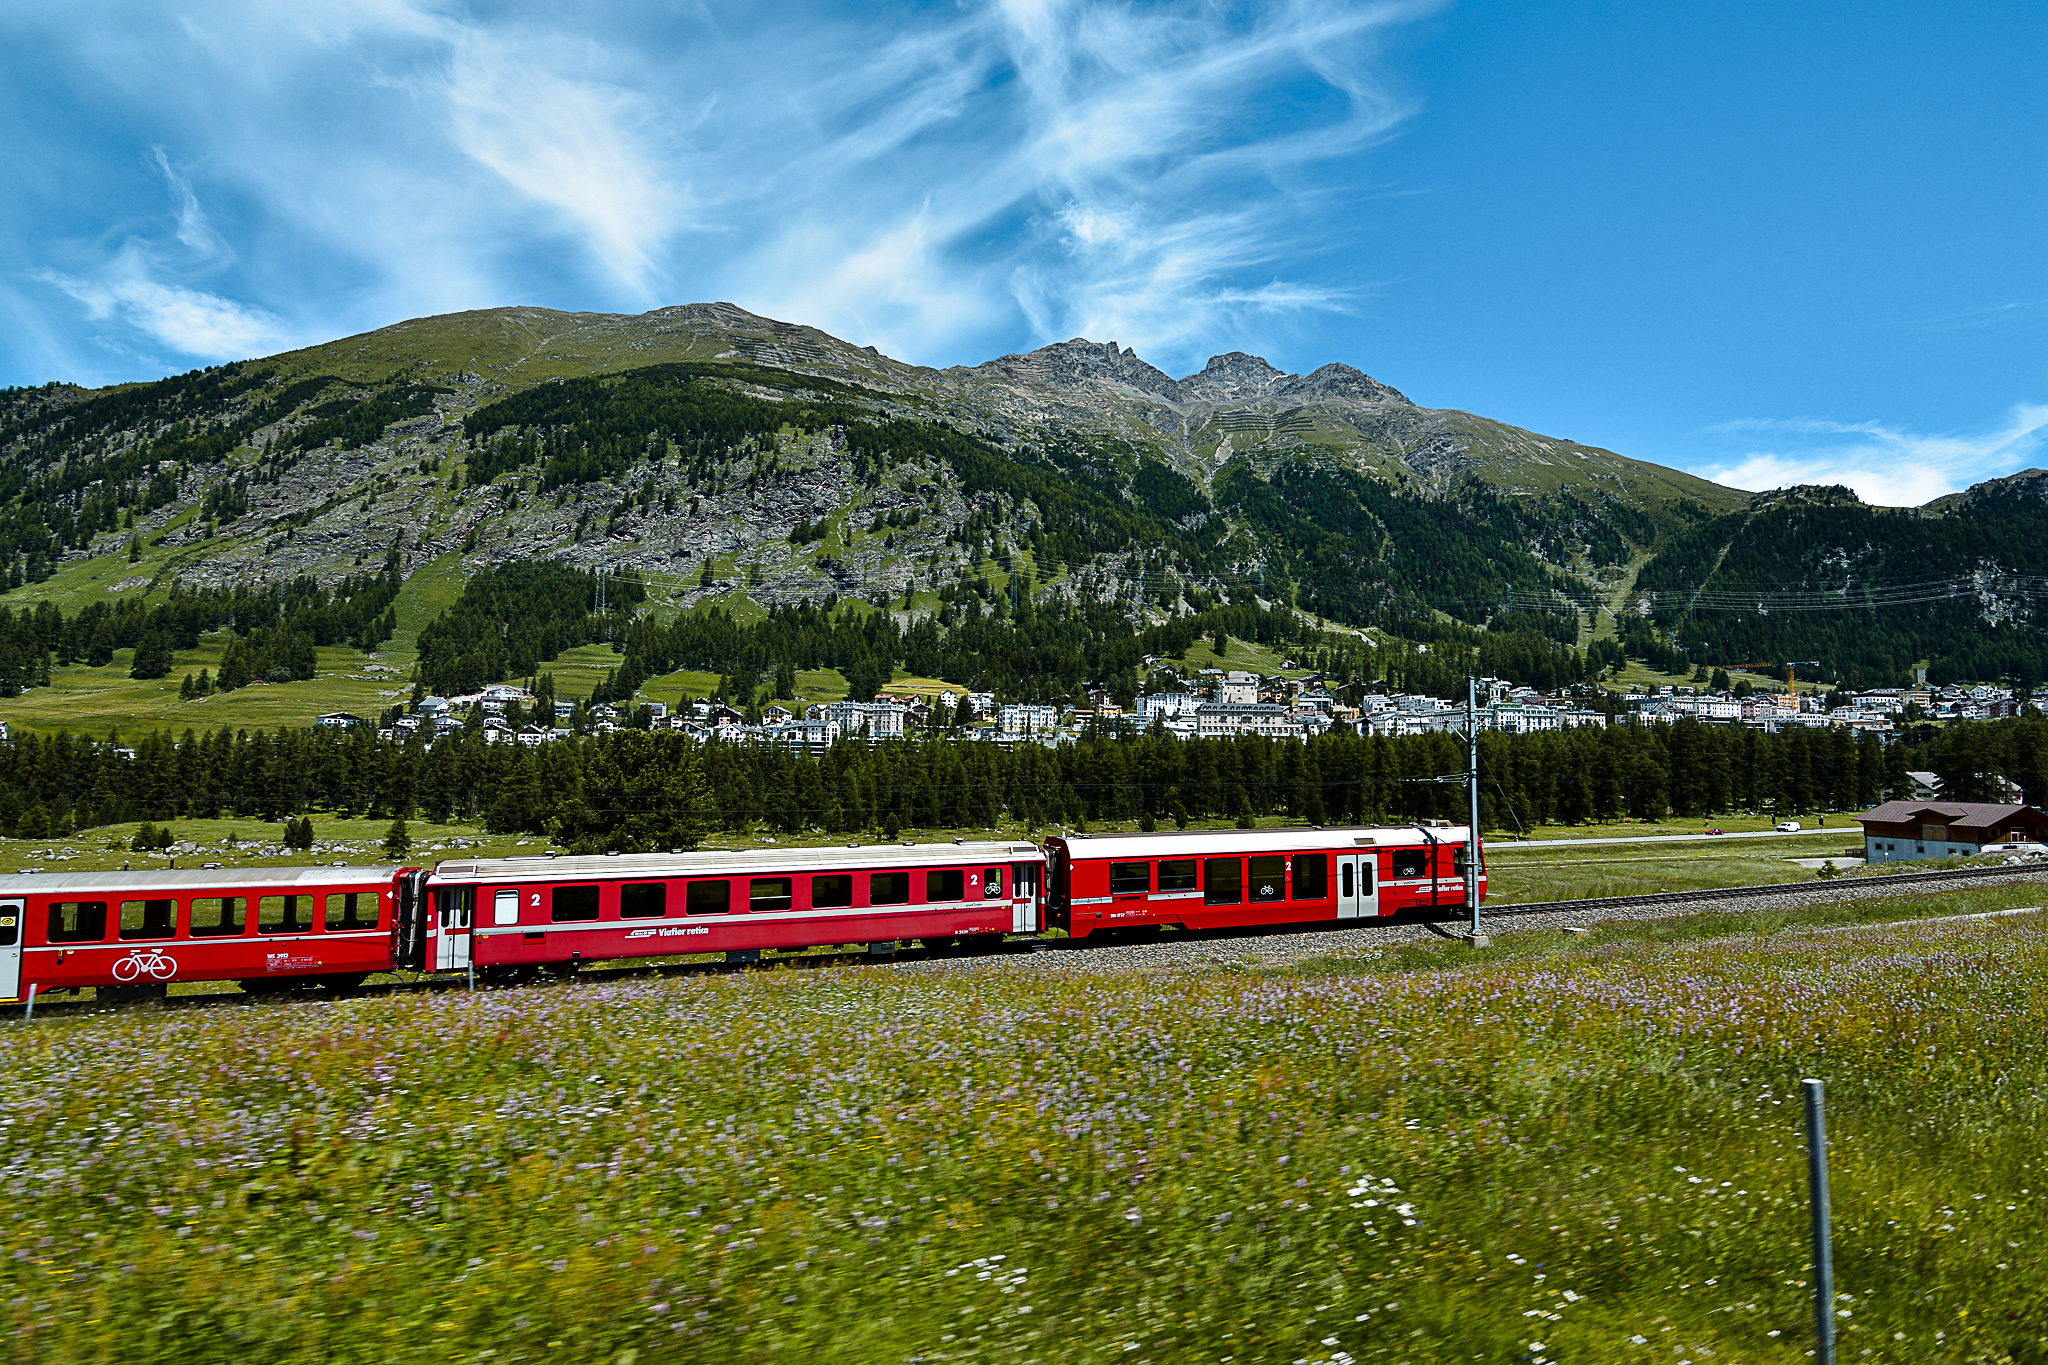 The Bernina train (St Moritz)...